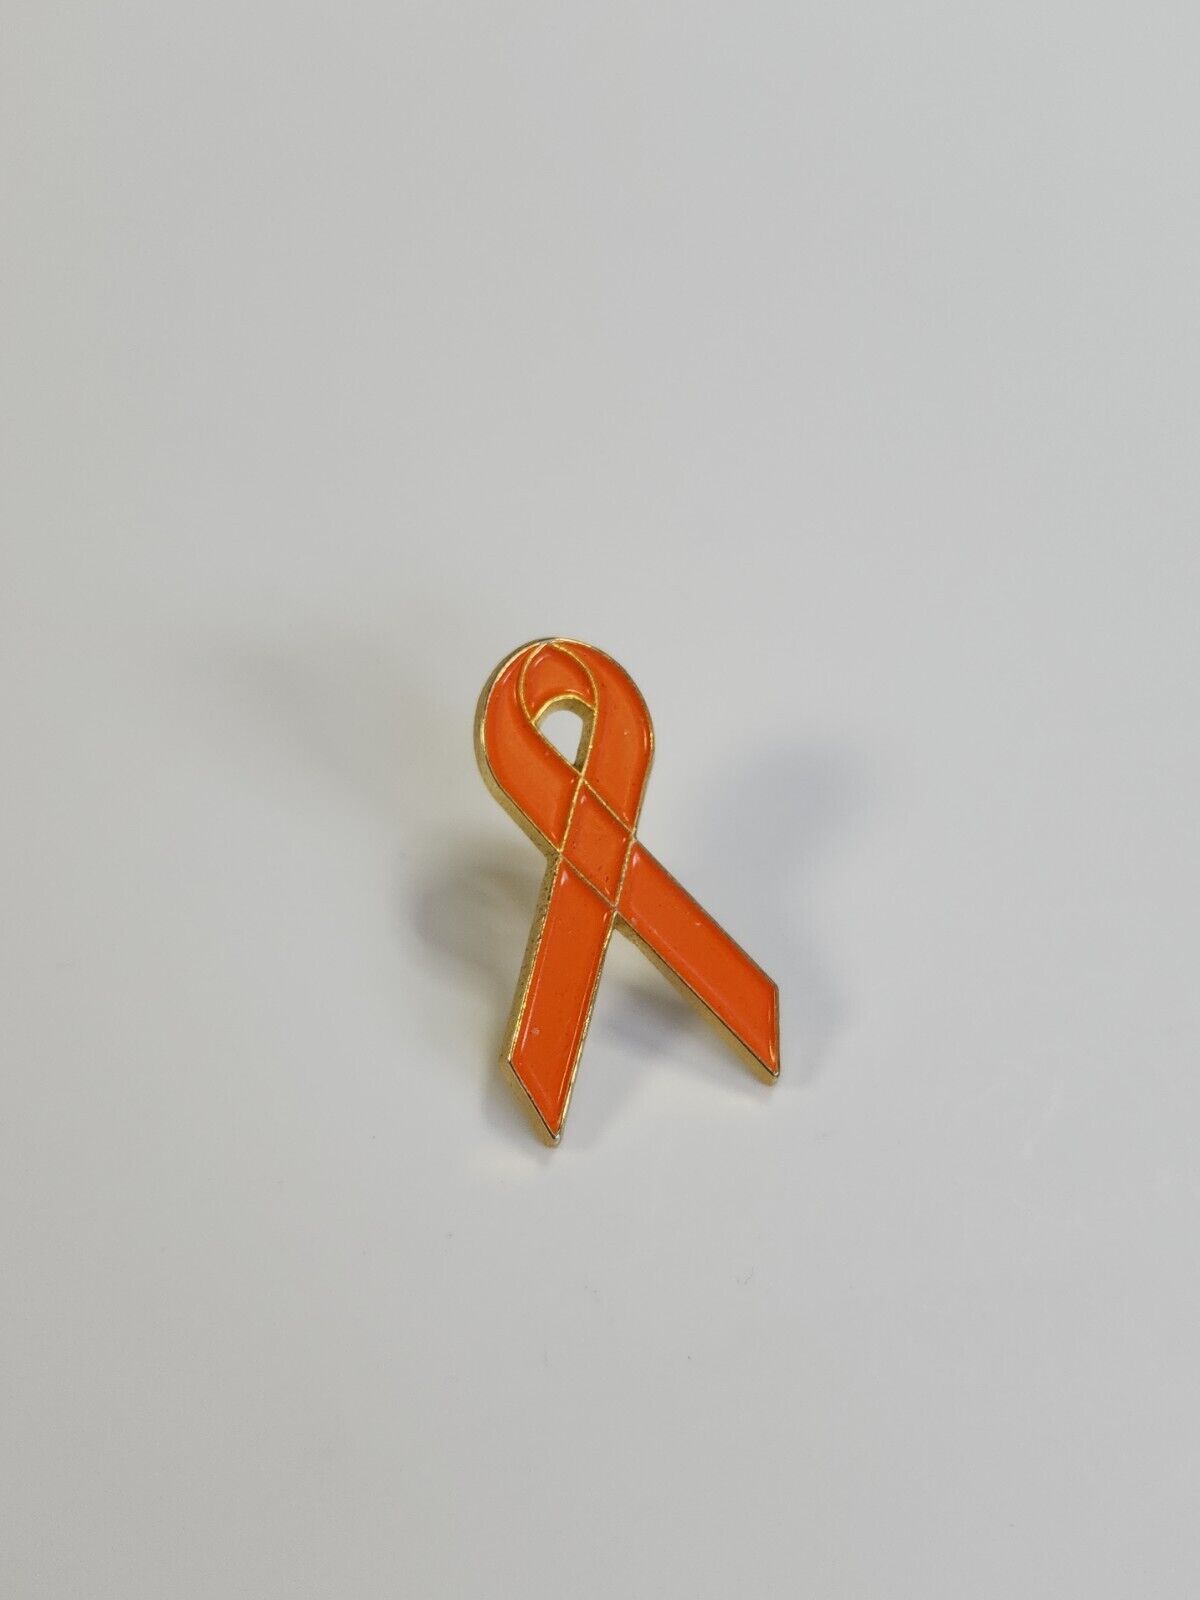 Orange Awareness Ribbon Lapel Pin Gun Violence Prevention Or Suicide Prevention 